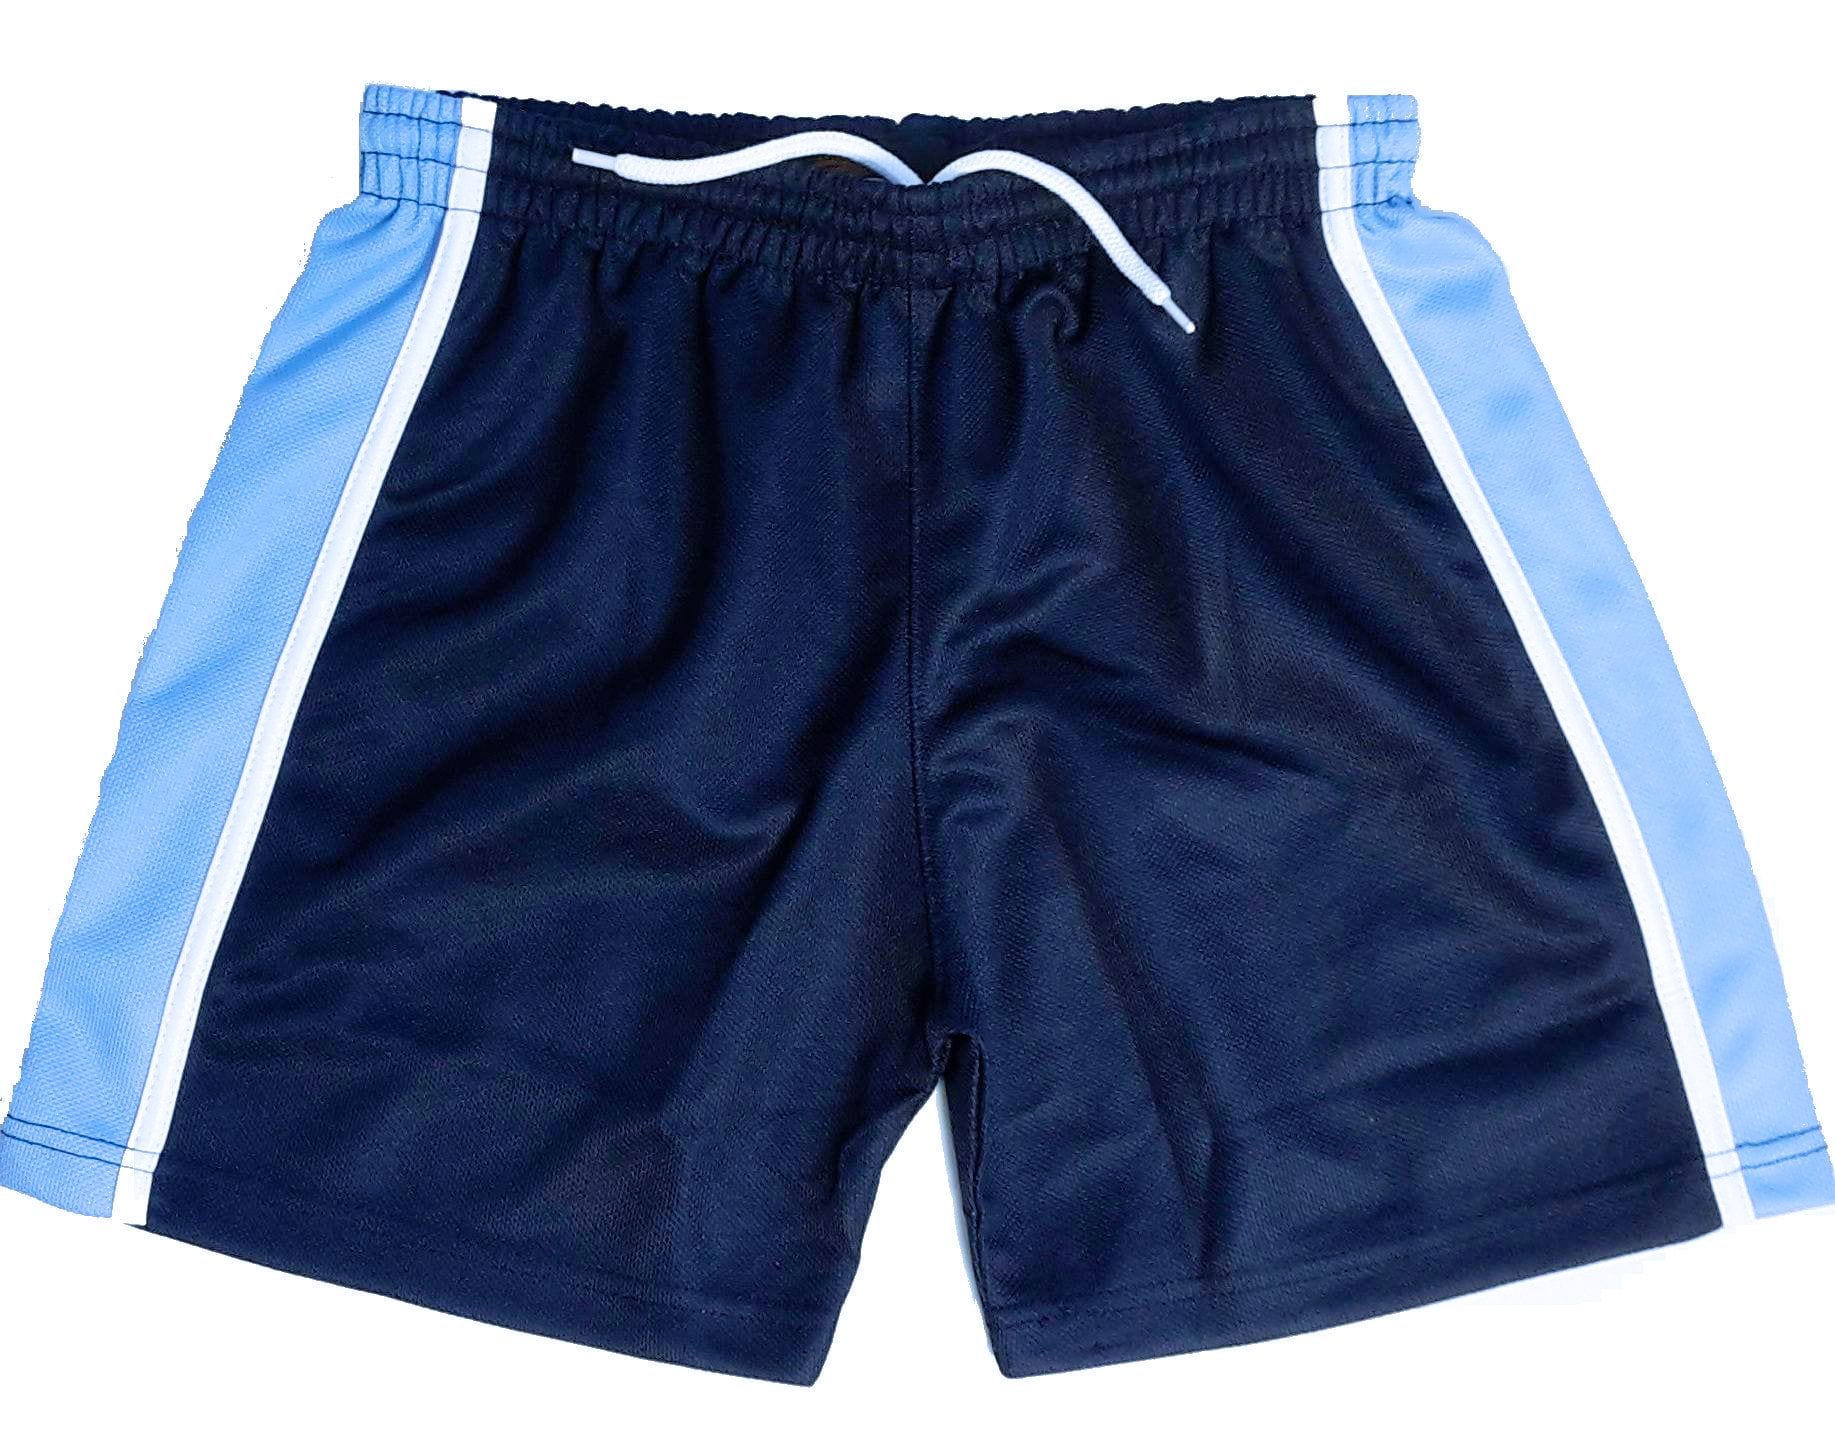 Samworth Enterprise Boys Navy/Sky P.E Shorts - Schoolwear Solutions